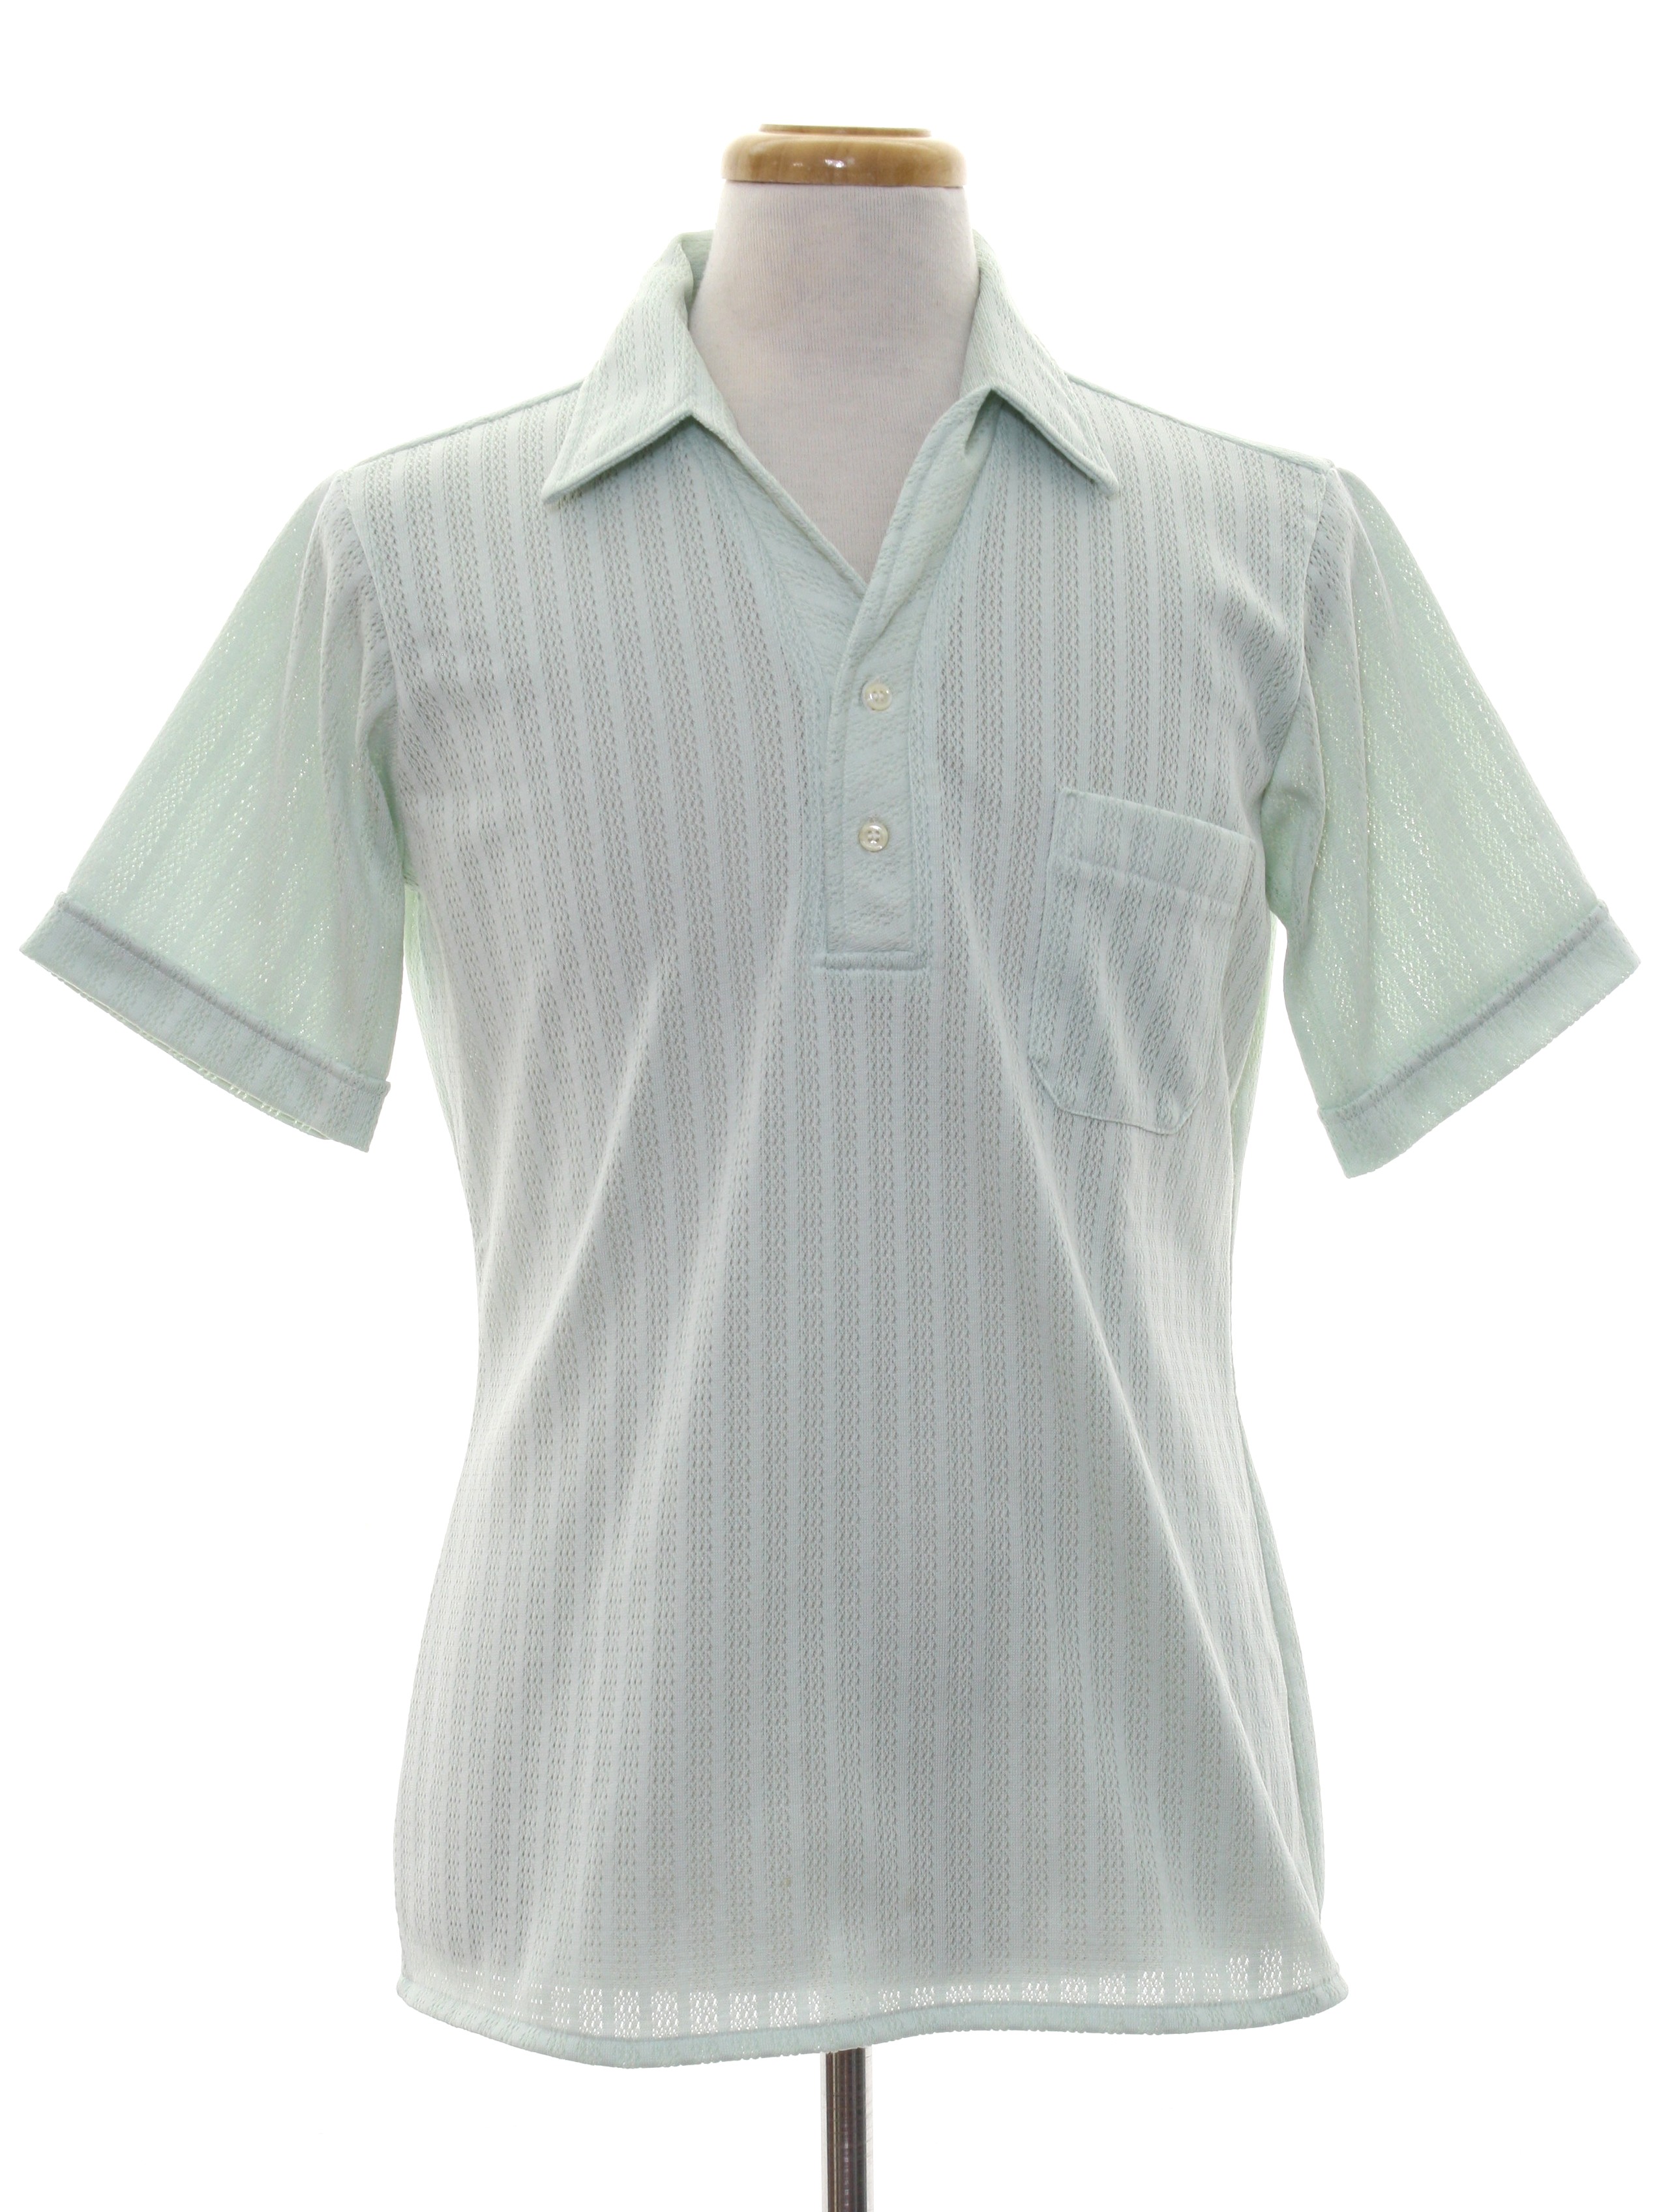 Retro Eighties Knit Shirt: 80s -Arrow Sportswear- Mens light green ...